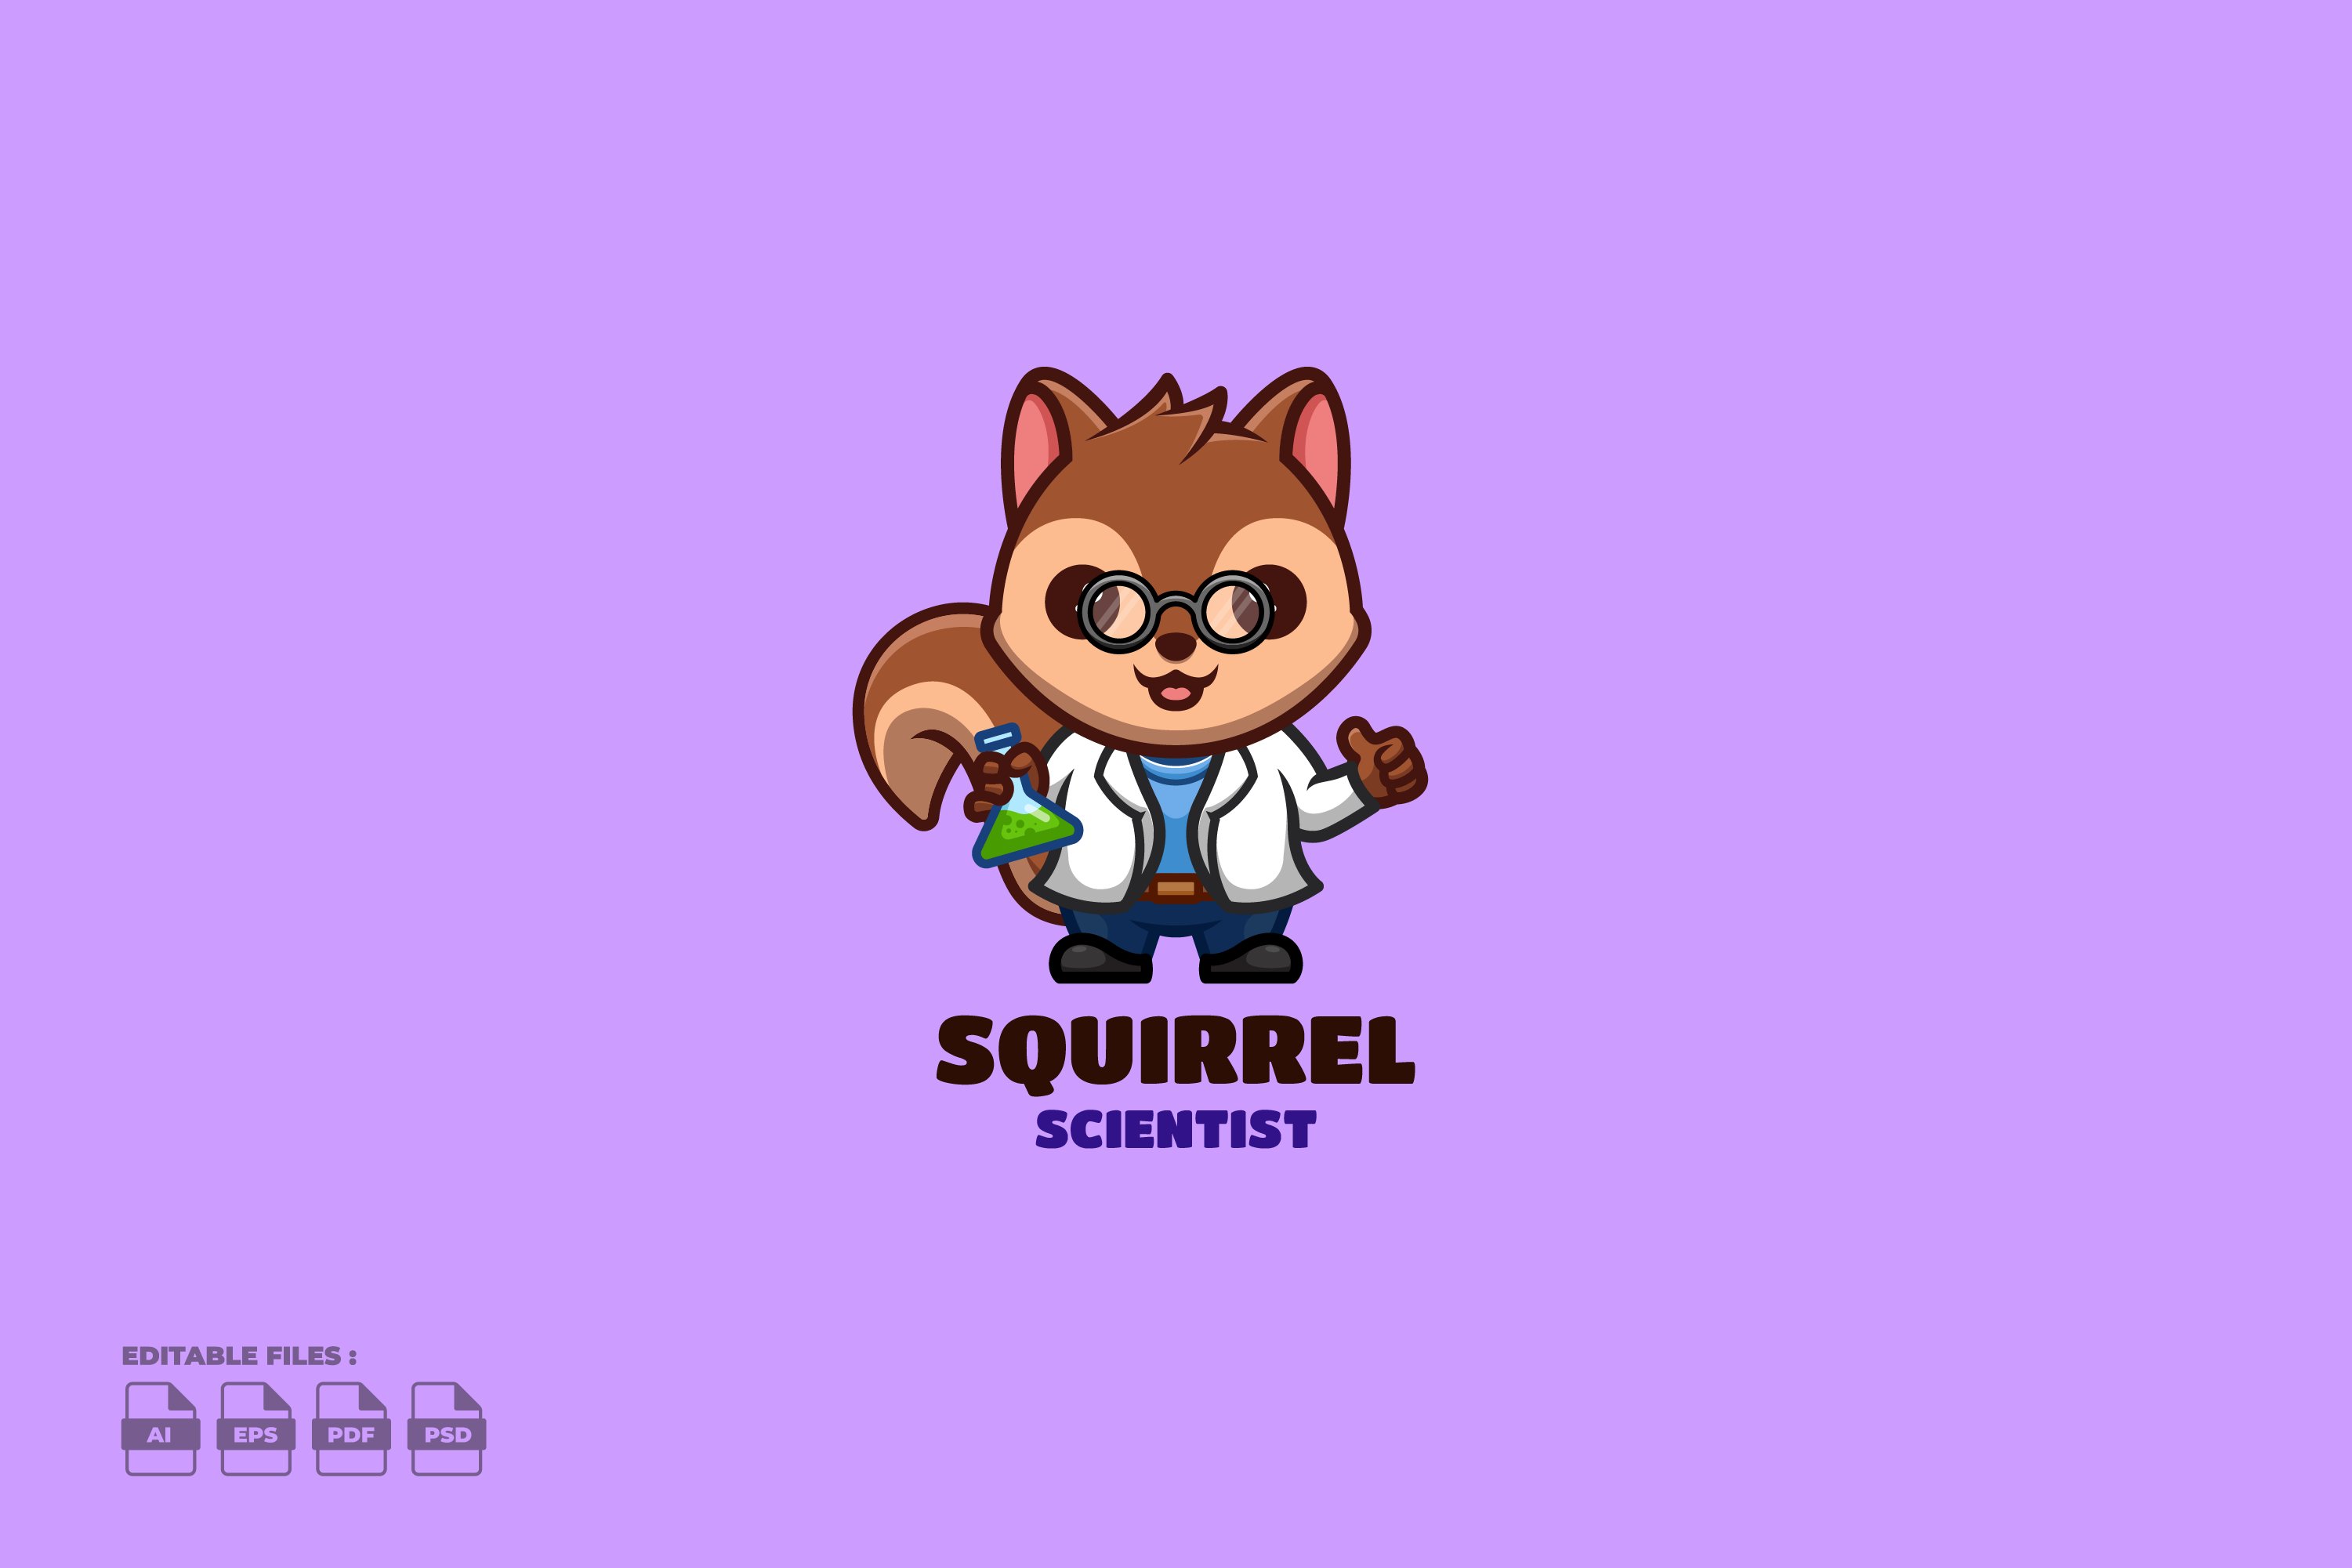 Scientist Squirrel Cute Mascot Logo cover image.